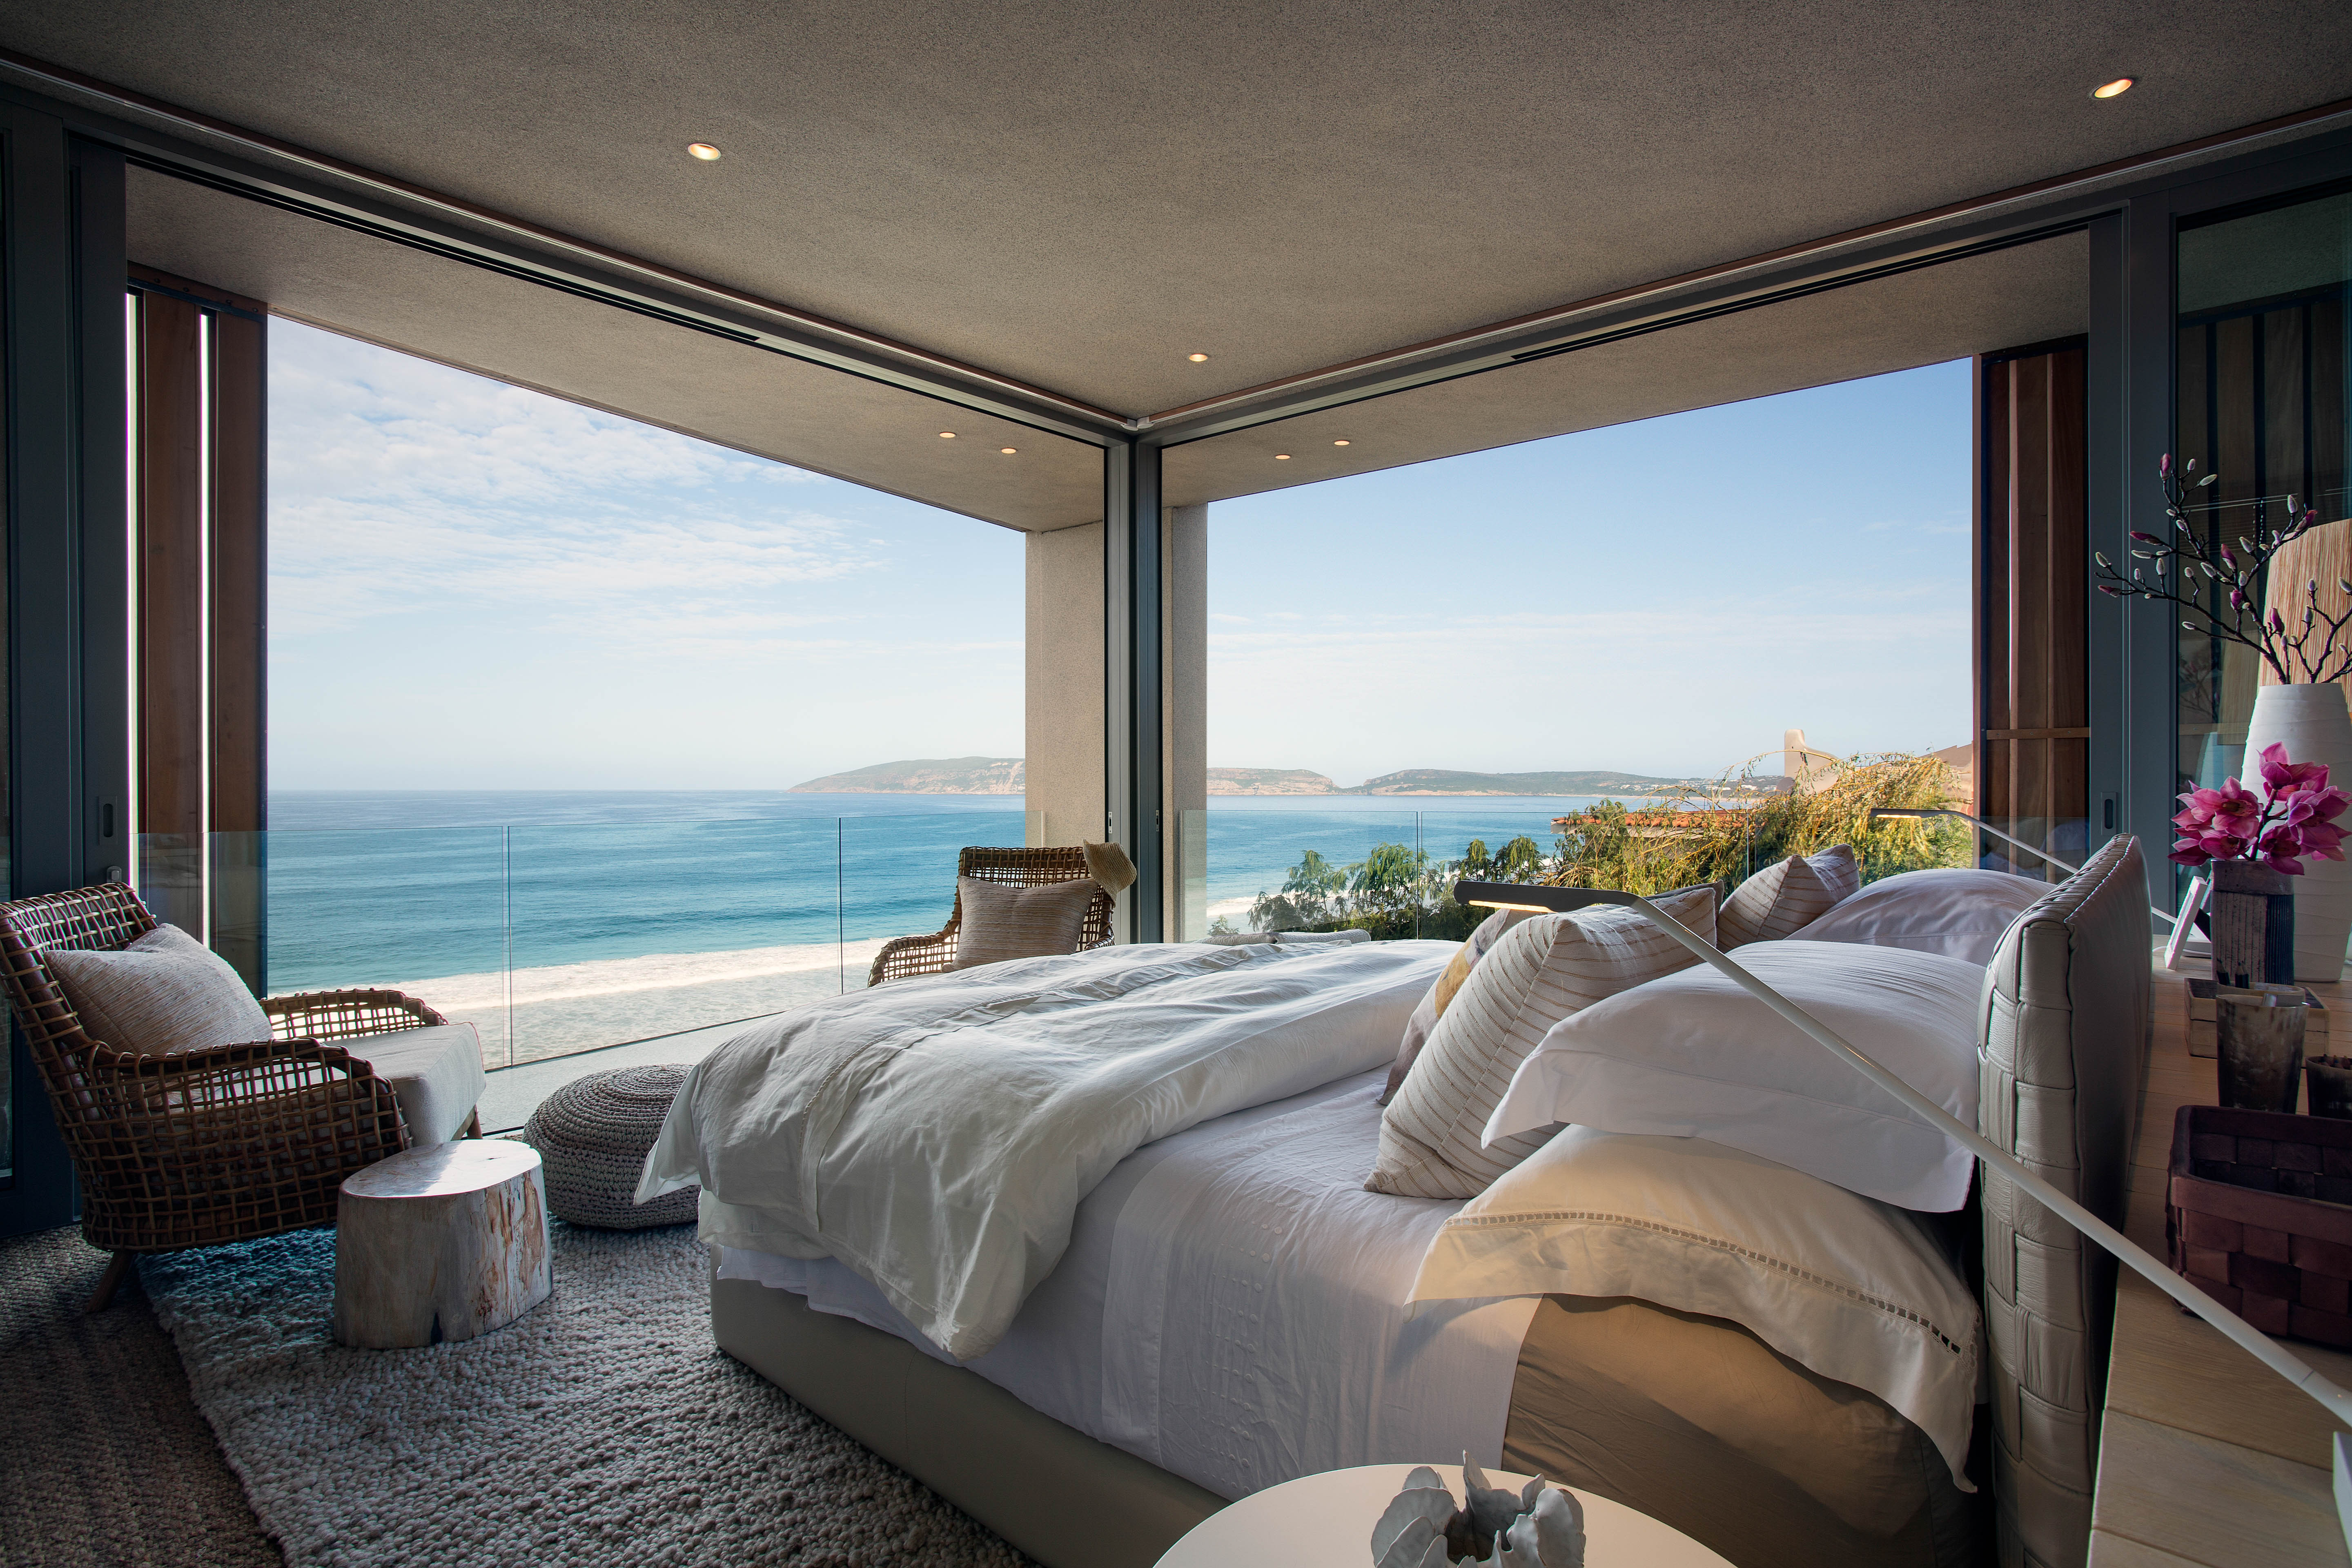 Домик с видом на море. Спальня с видом на океан. Вилла с видом на океан. Спальня с красивым видом. Вид со спальни с панорамными окнами.